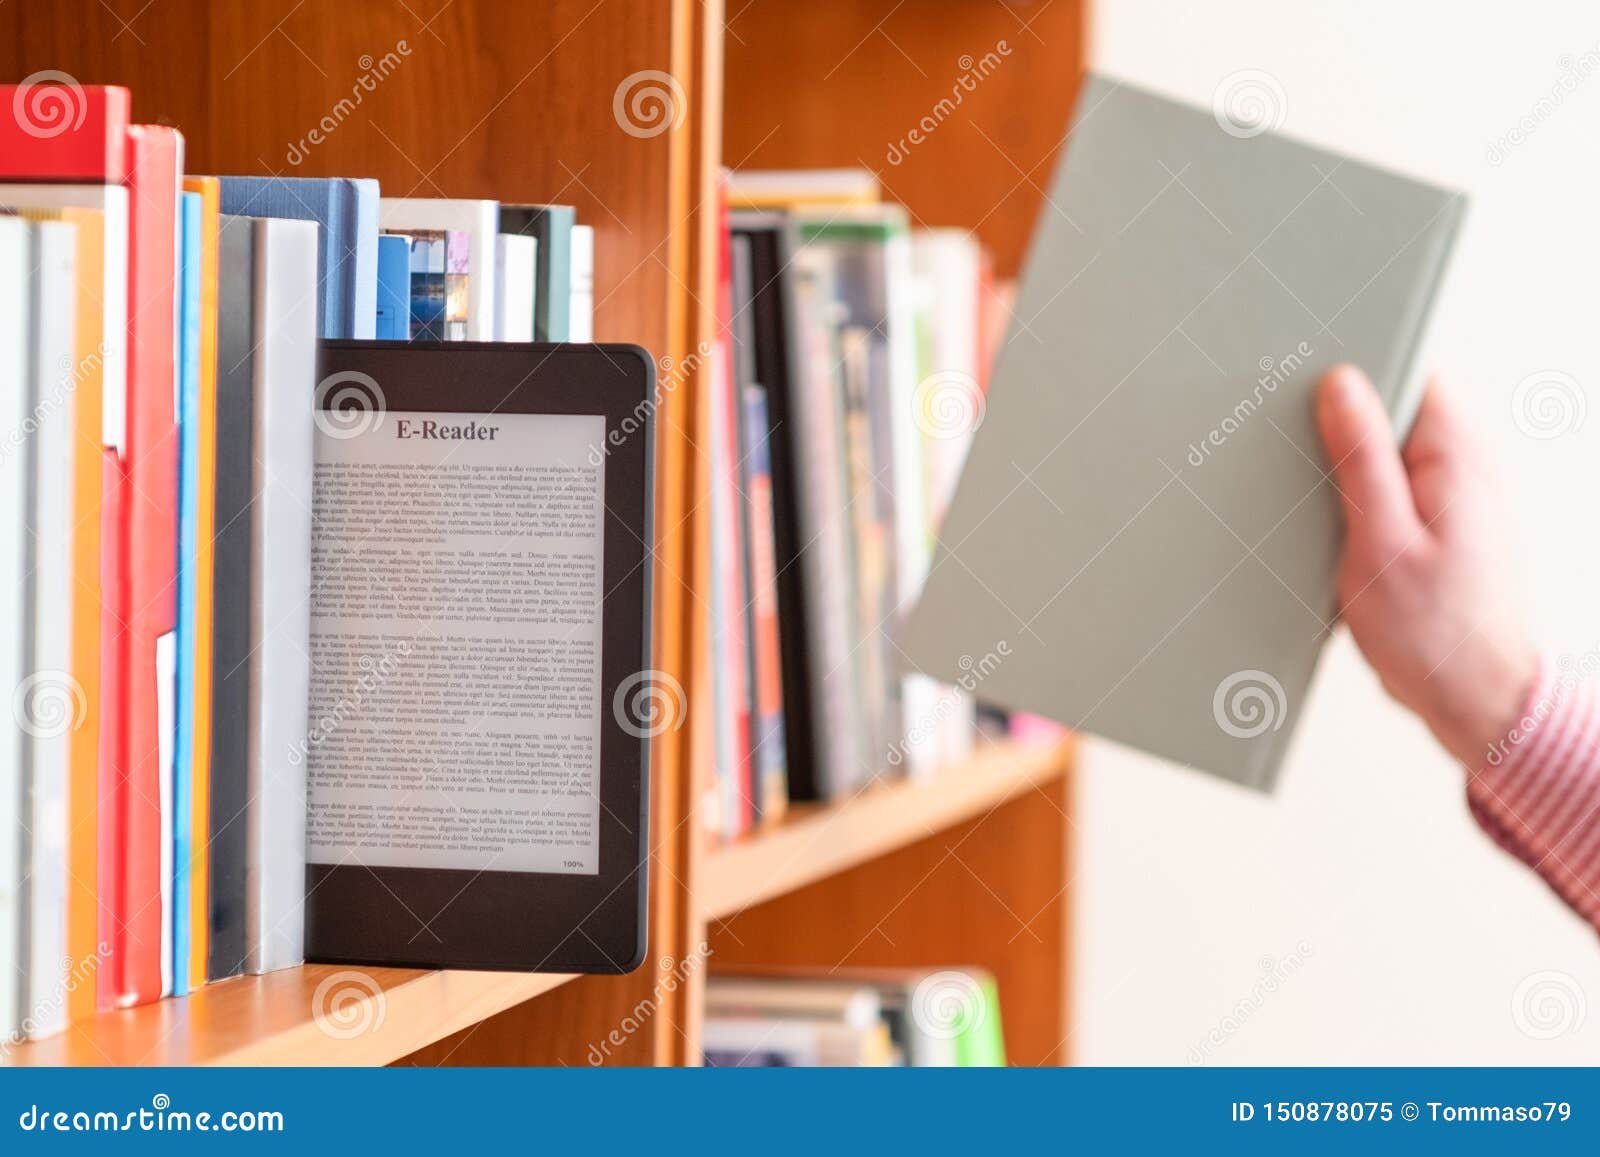 Hand Of Student Keeping Digital Tablet In Bookshelf In School